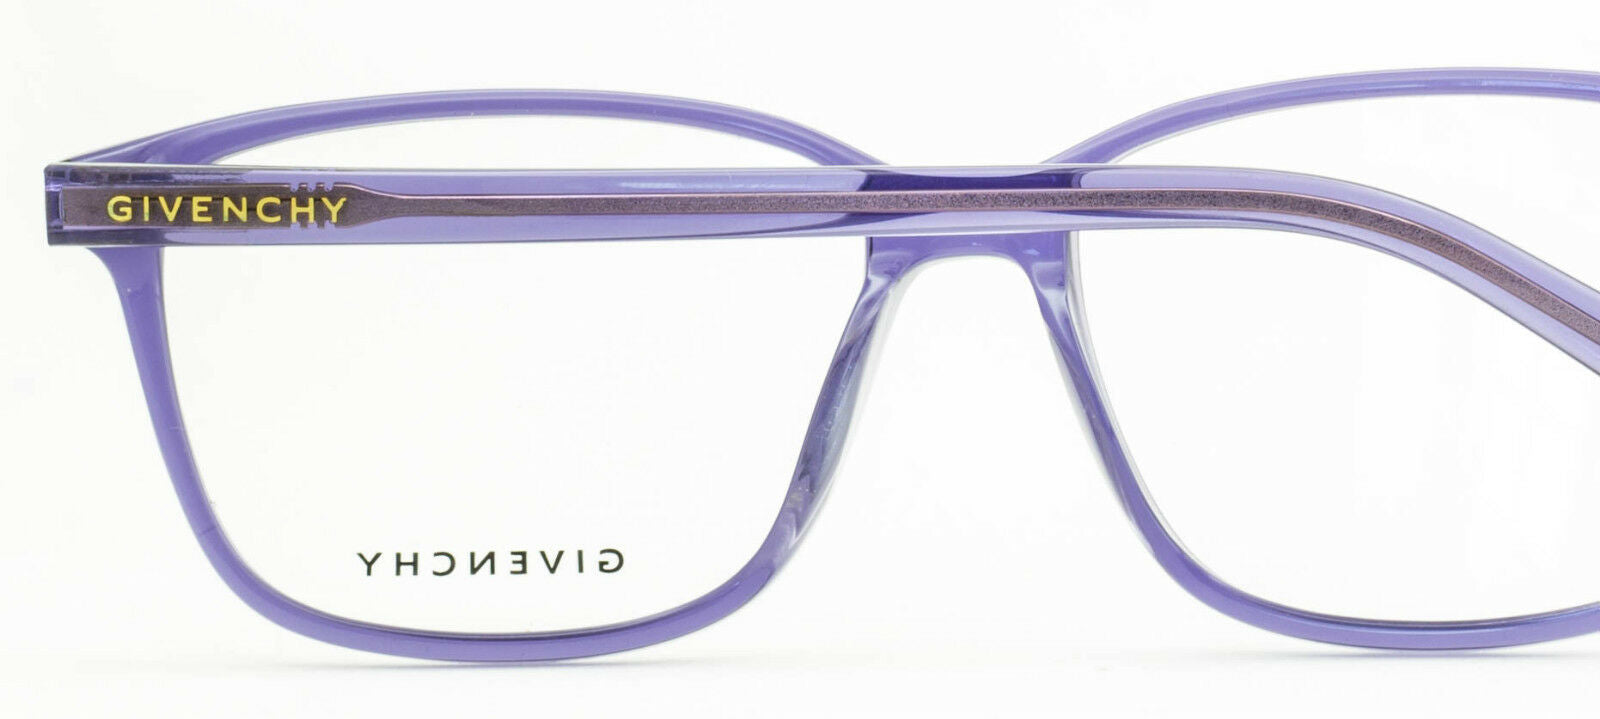 GIVENCHY VGV800 COL.0U55 Eyewear FRAMES RX Optical Glasses Eyeglasses New - BNIB